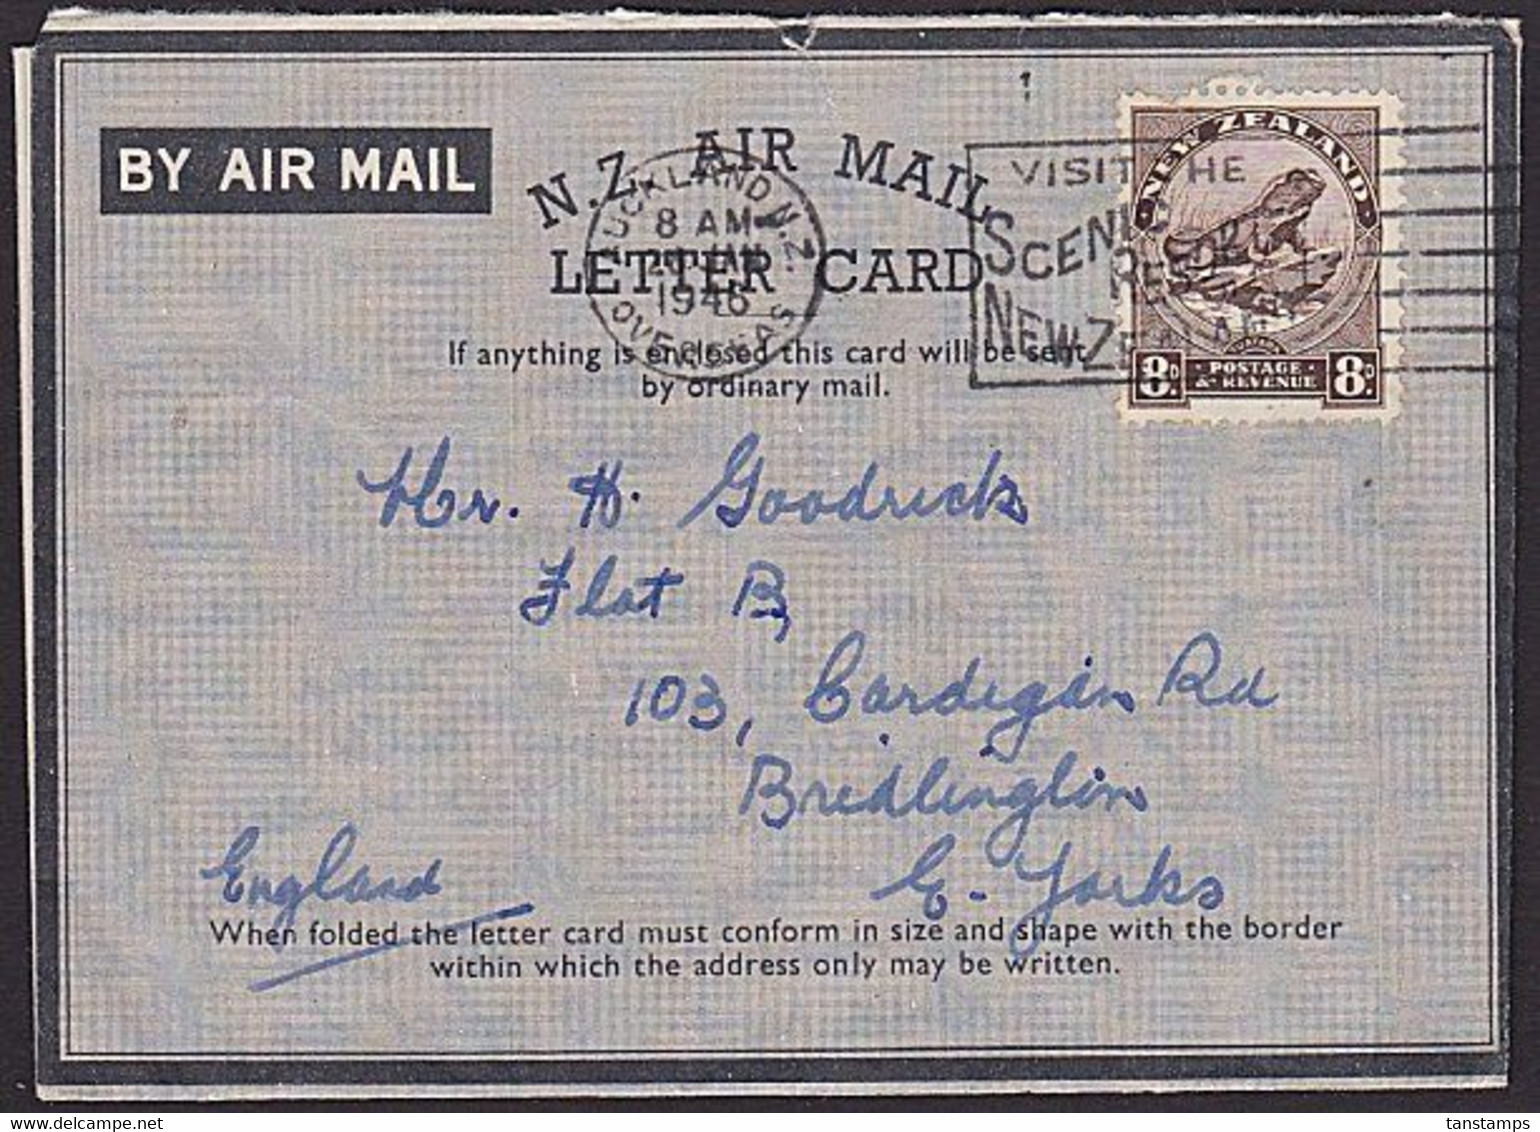 NEW ZEALAND AEROGRAM LETTER CARD TUATARA 8d RATE TO UK TOURIST SLOGAN 1946 - Briefe U. Dokumente